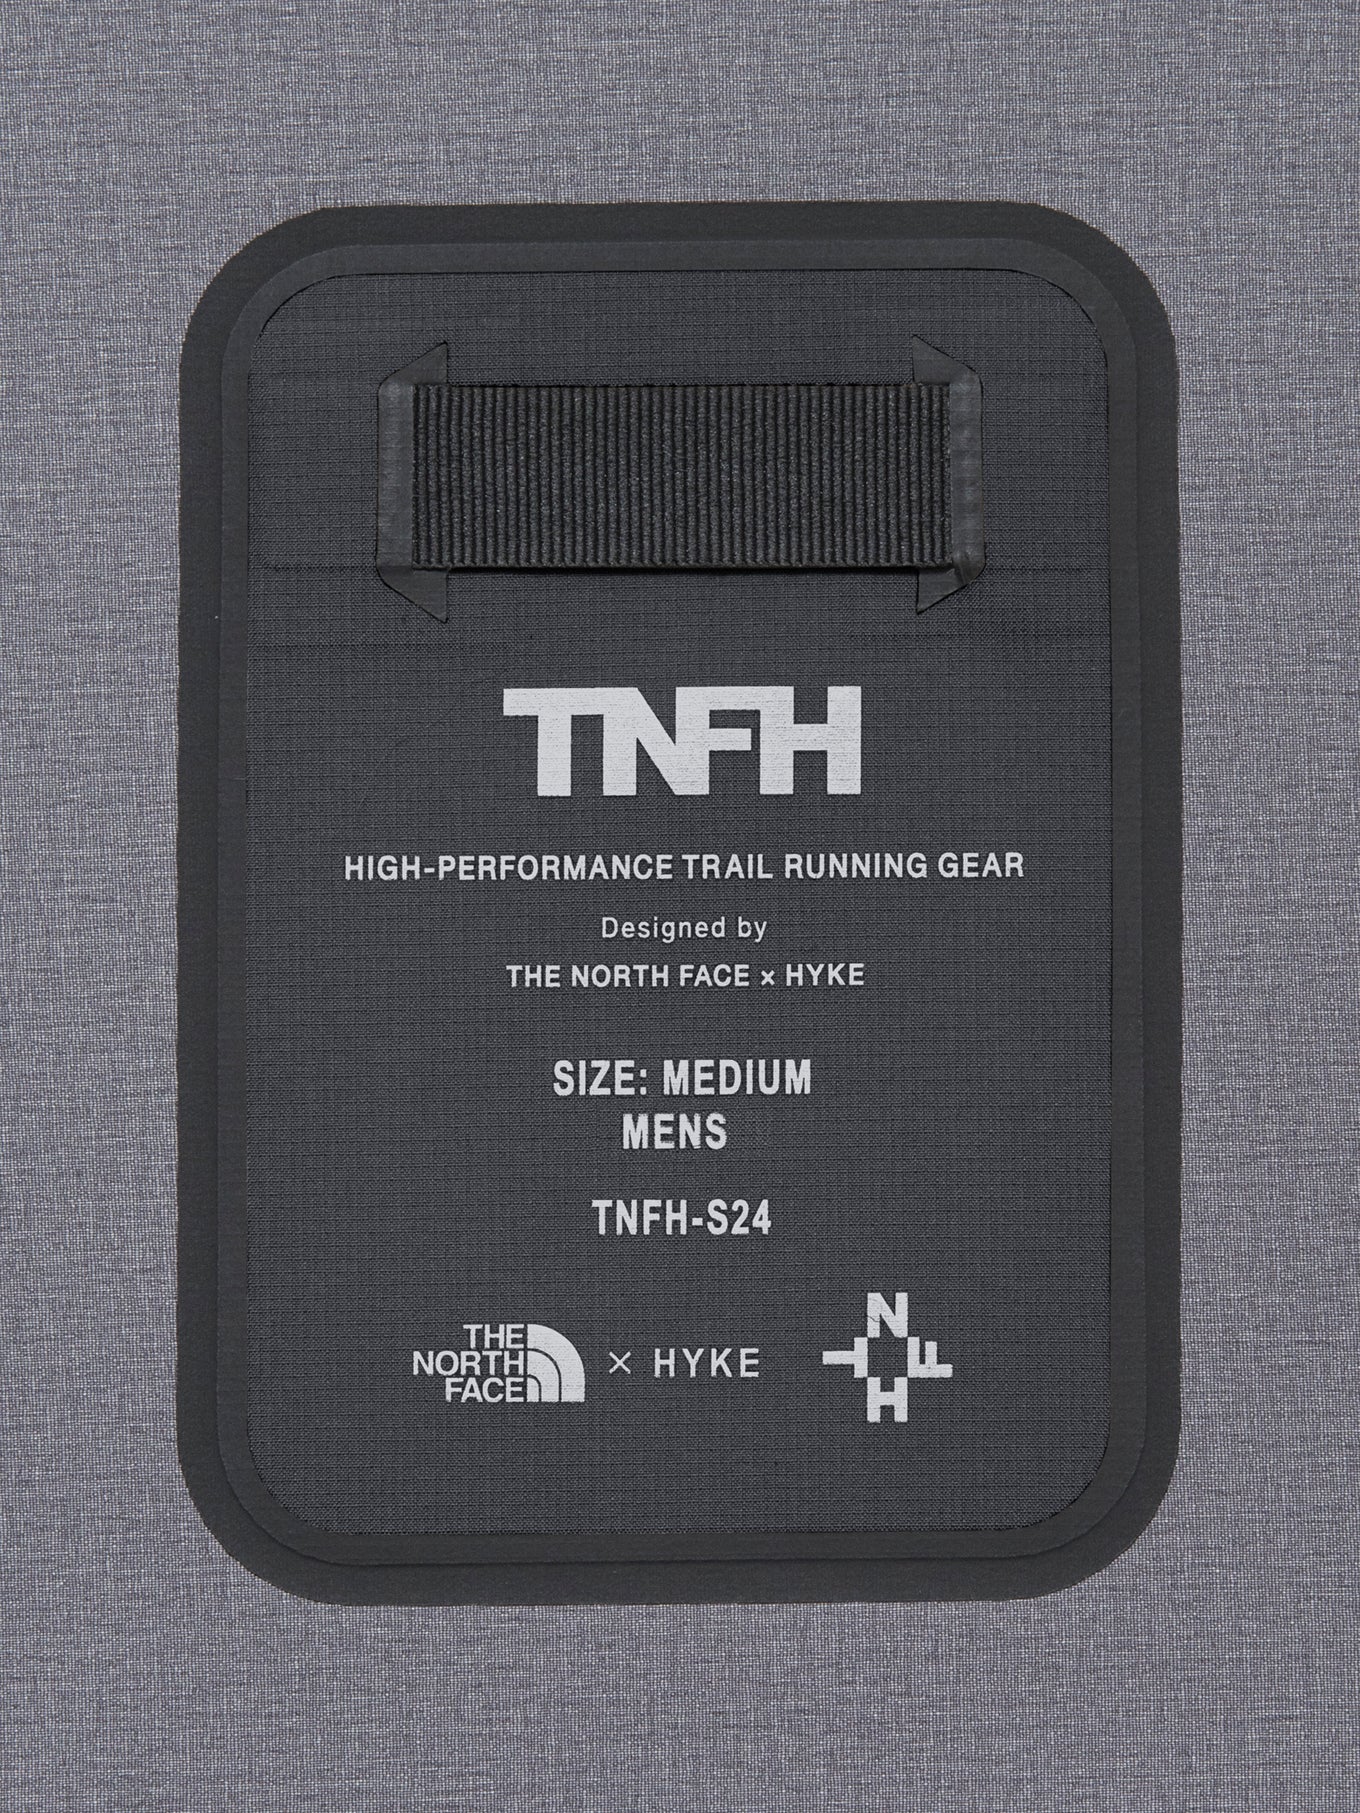 GTX Trail Jacket (Mens)<br>TNFH  THE NORTH FACE × HYKE